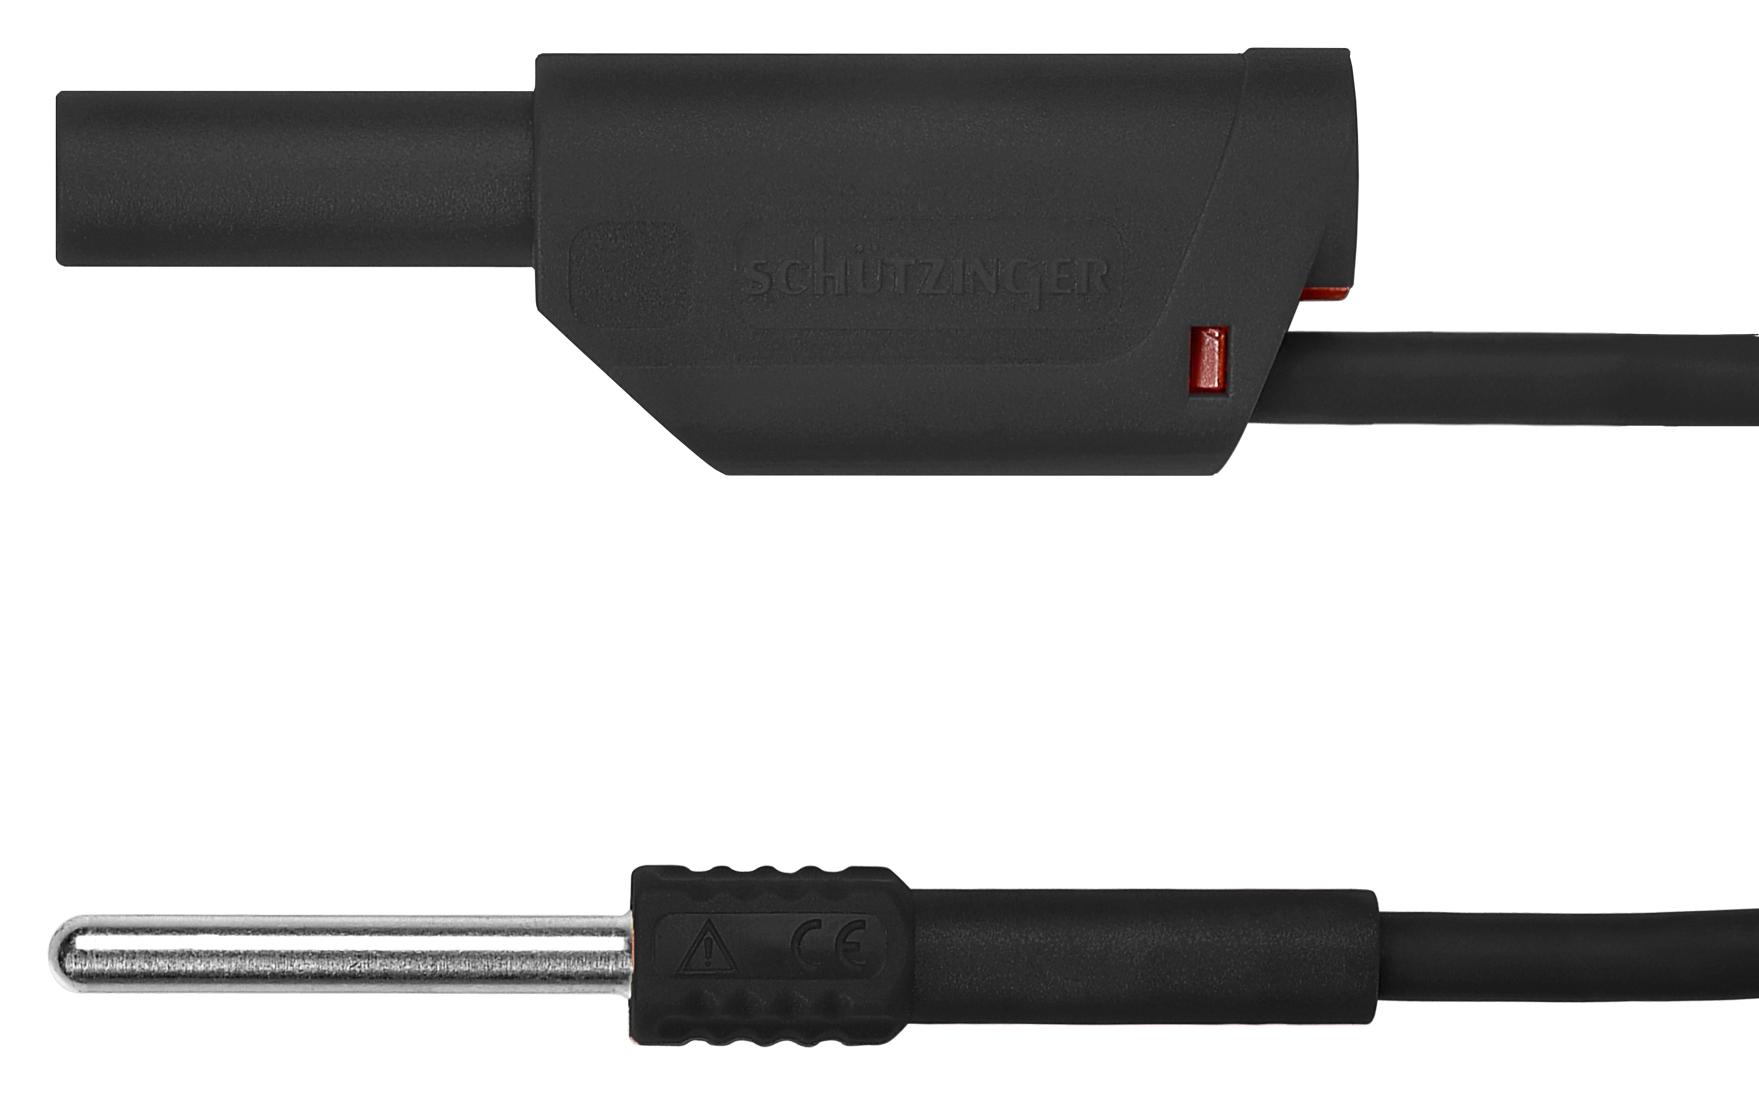 Schutzinger Al 8323 / 1 / 50 / Sw Test Lead, 4mm Plug-Pin Tip Plug, 500mm